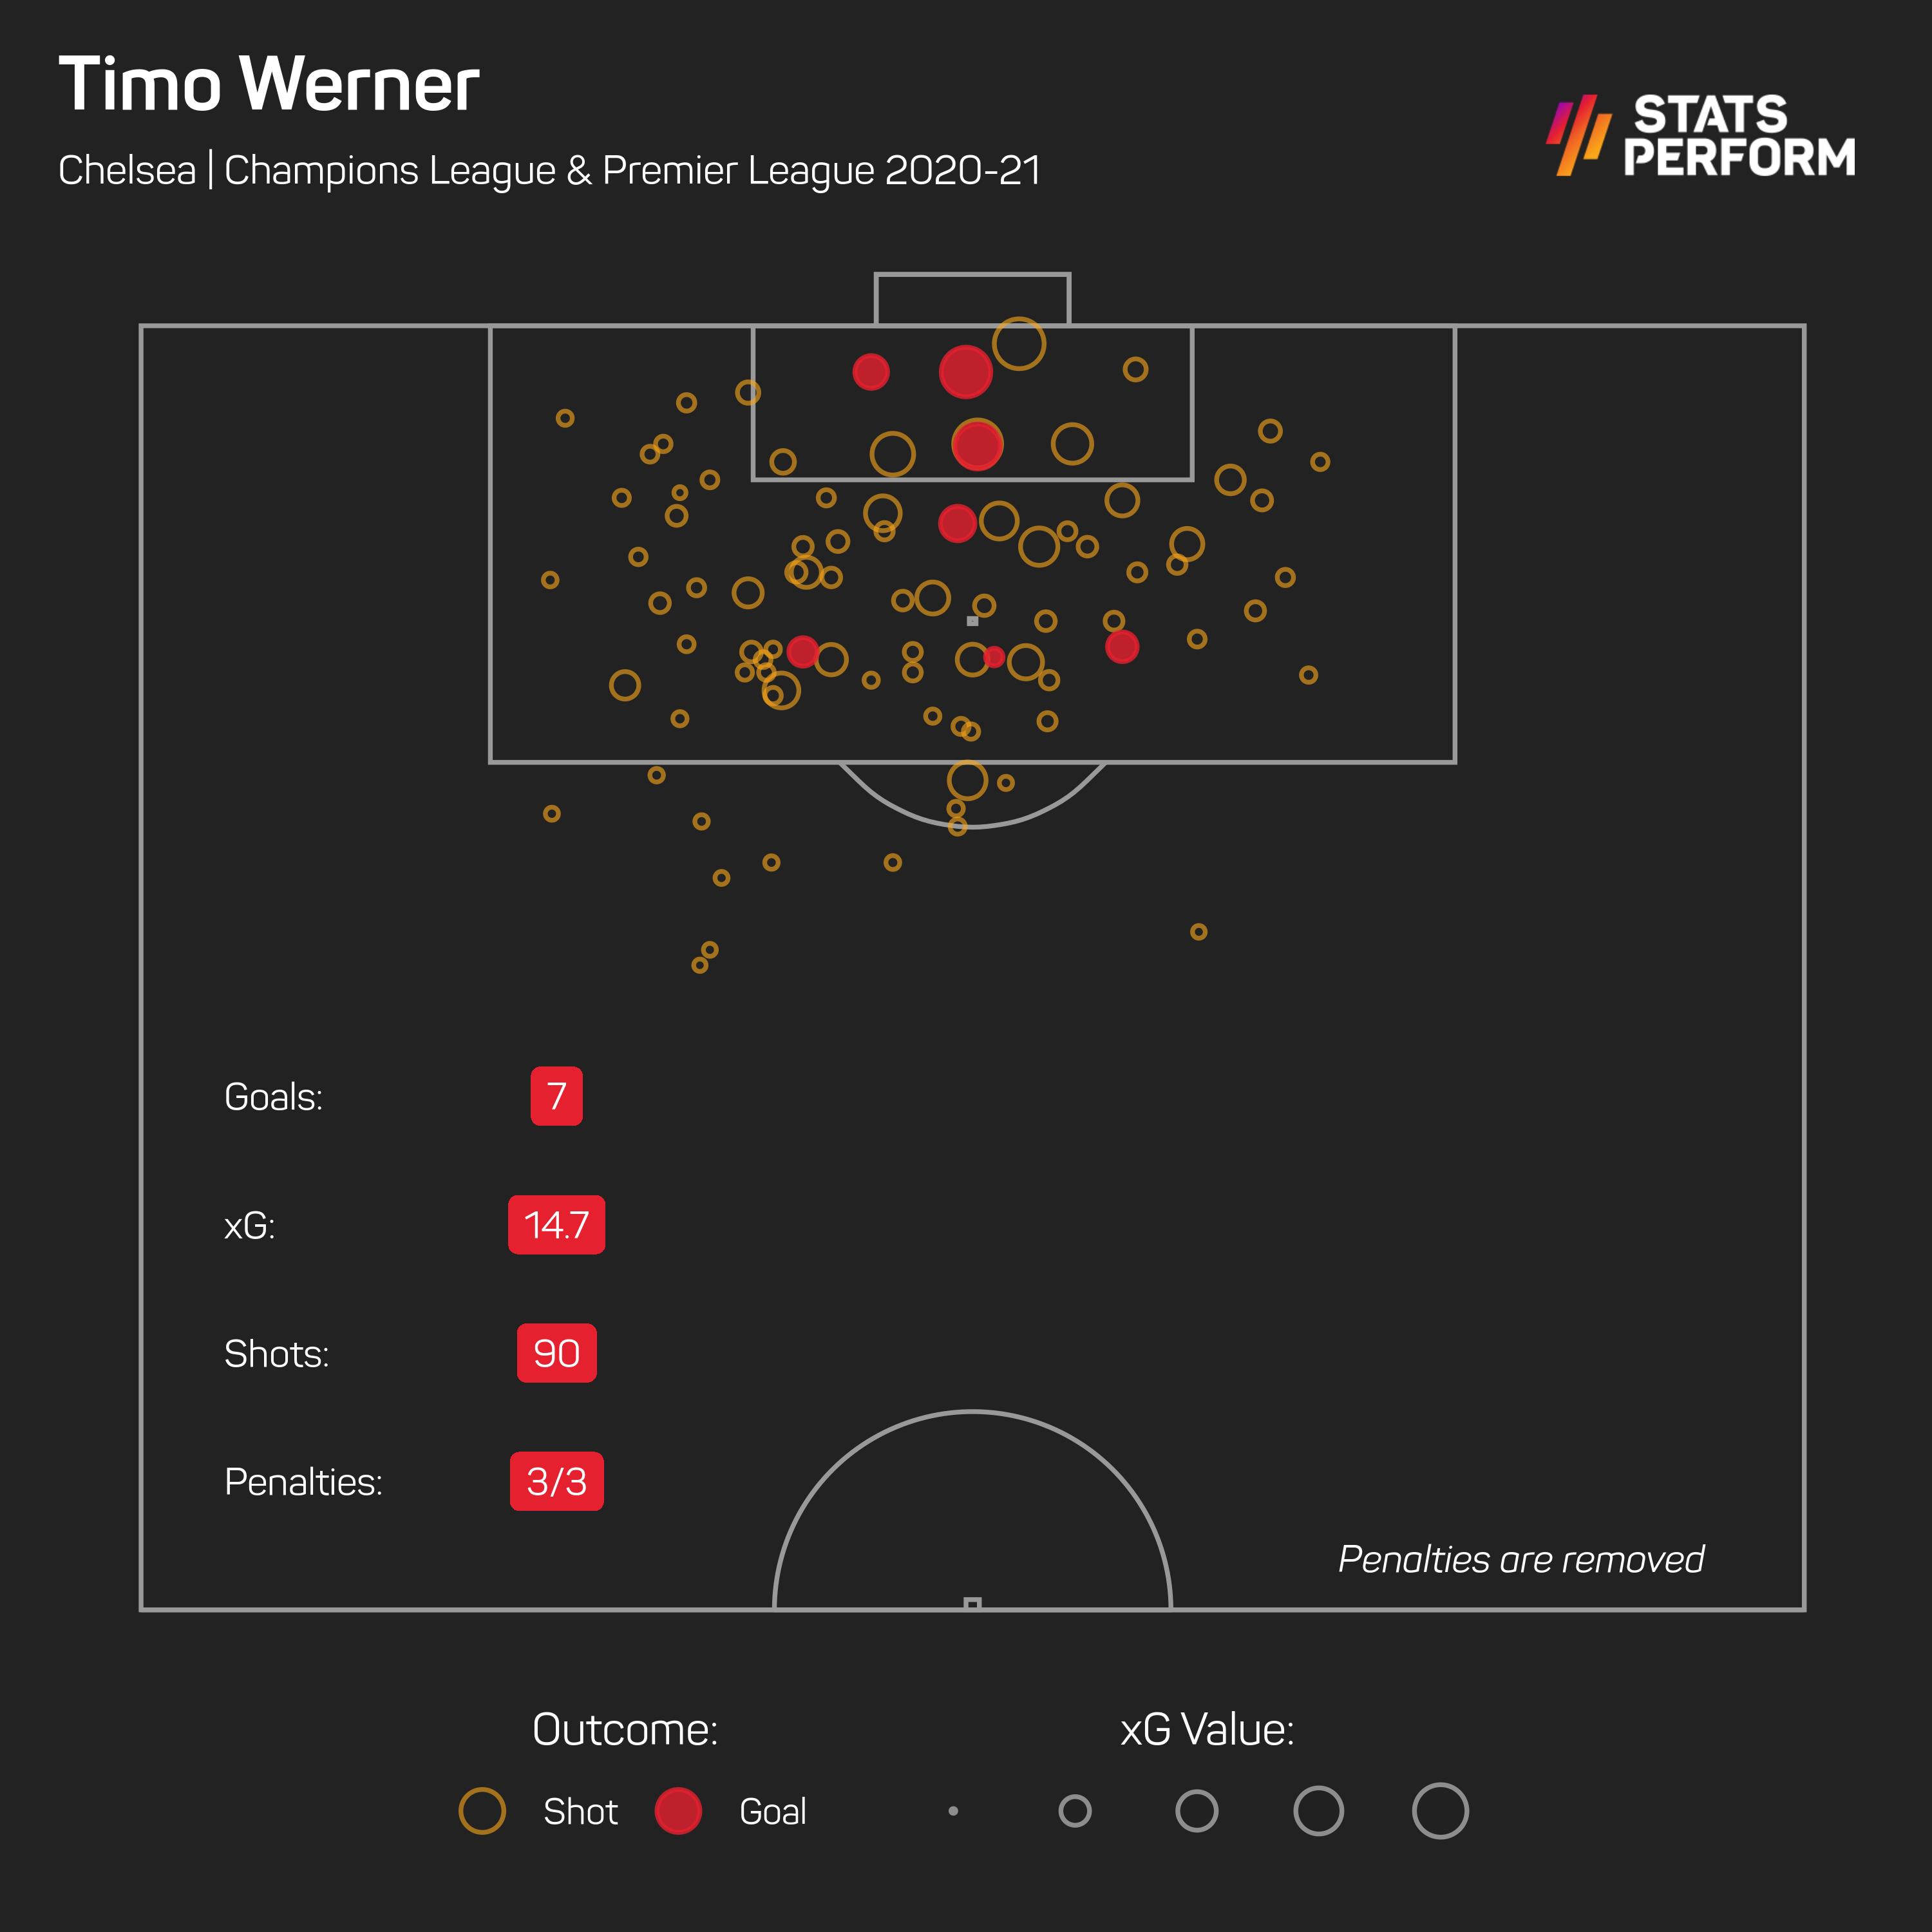 Timo Werner 2020-21 xG